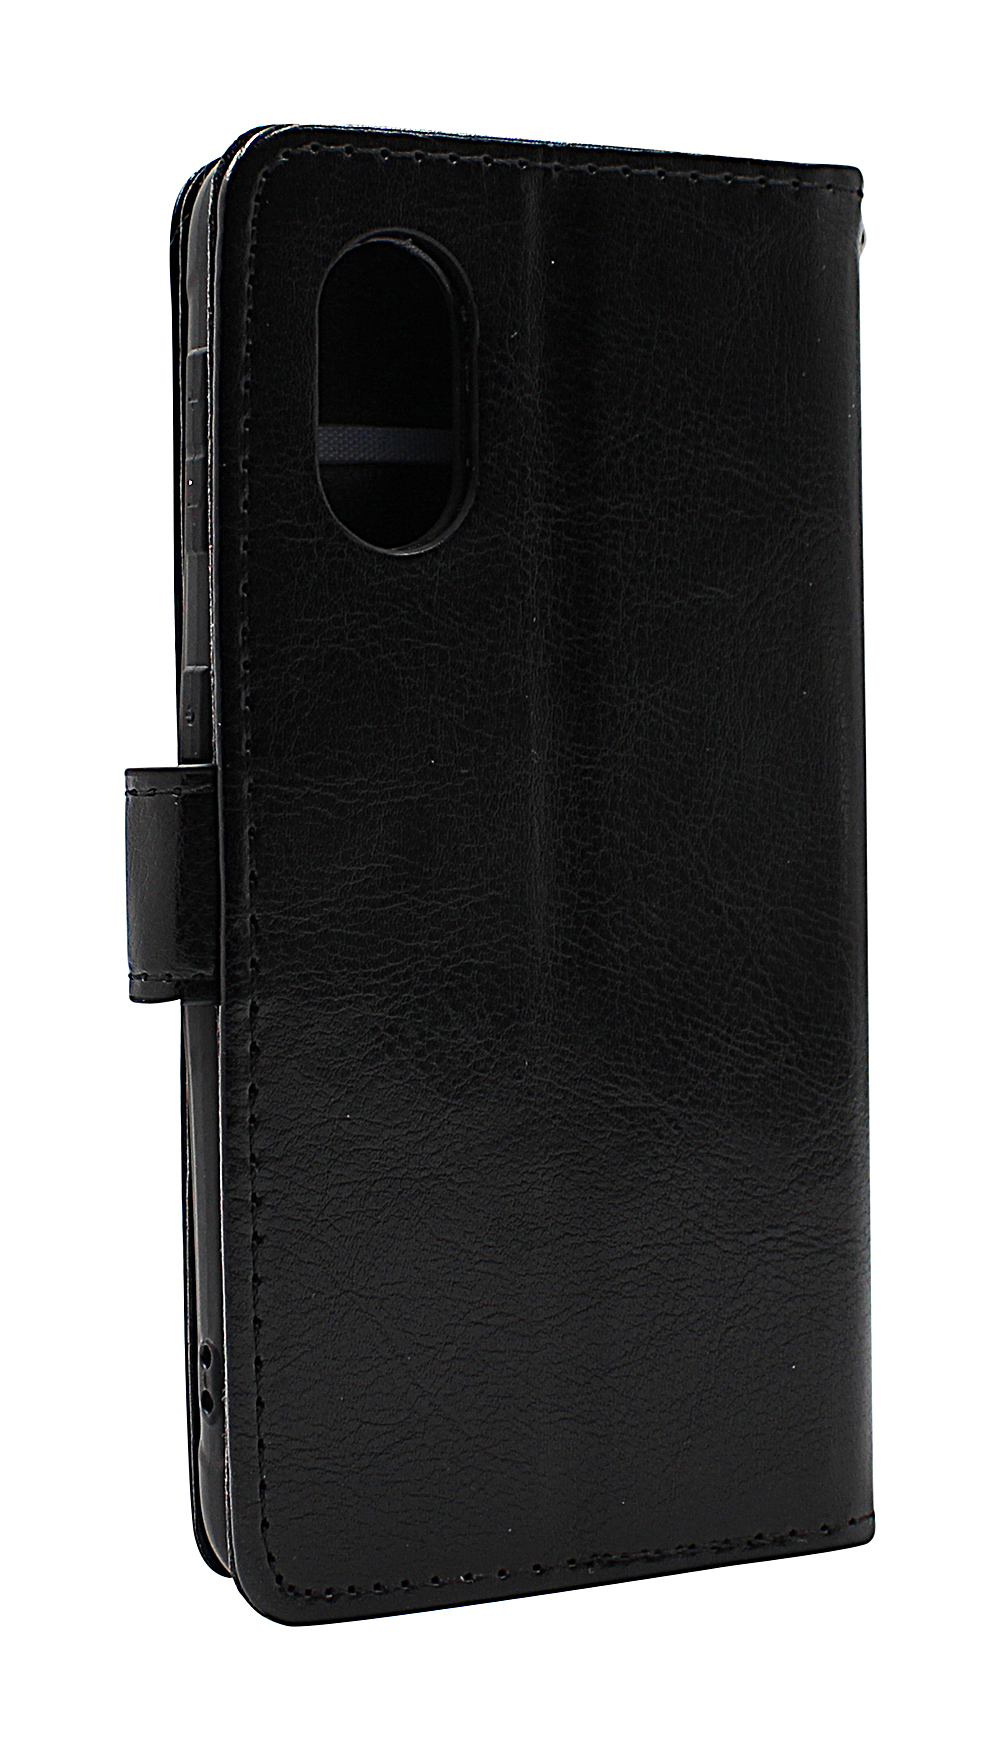 Crazy Horse Wallet Samsung Galaxy Xcover 5 (SM-G525F)